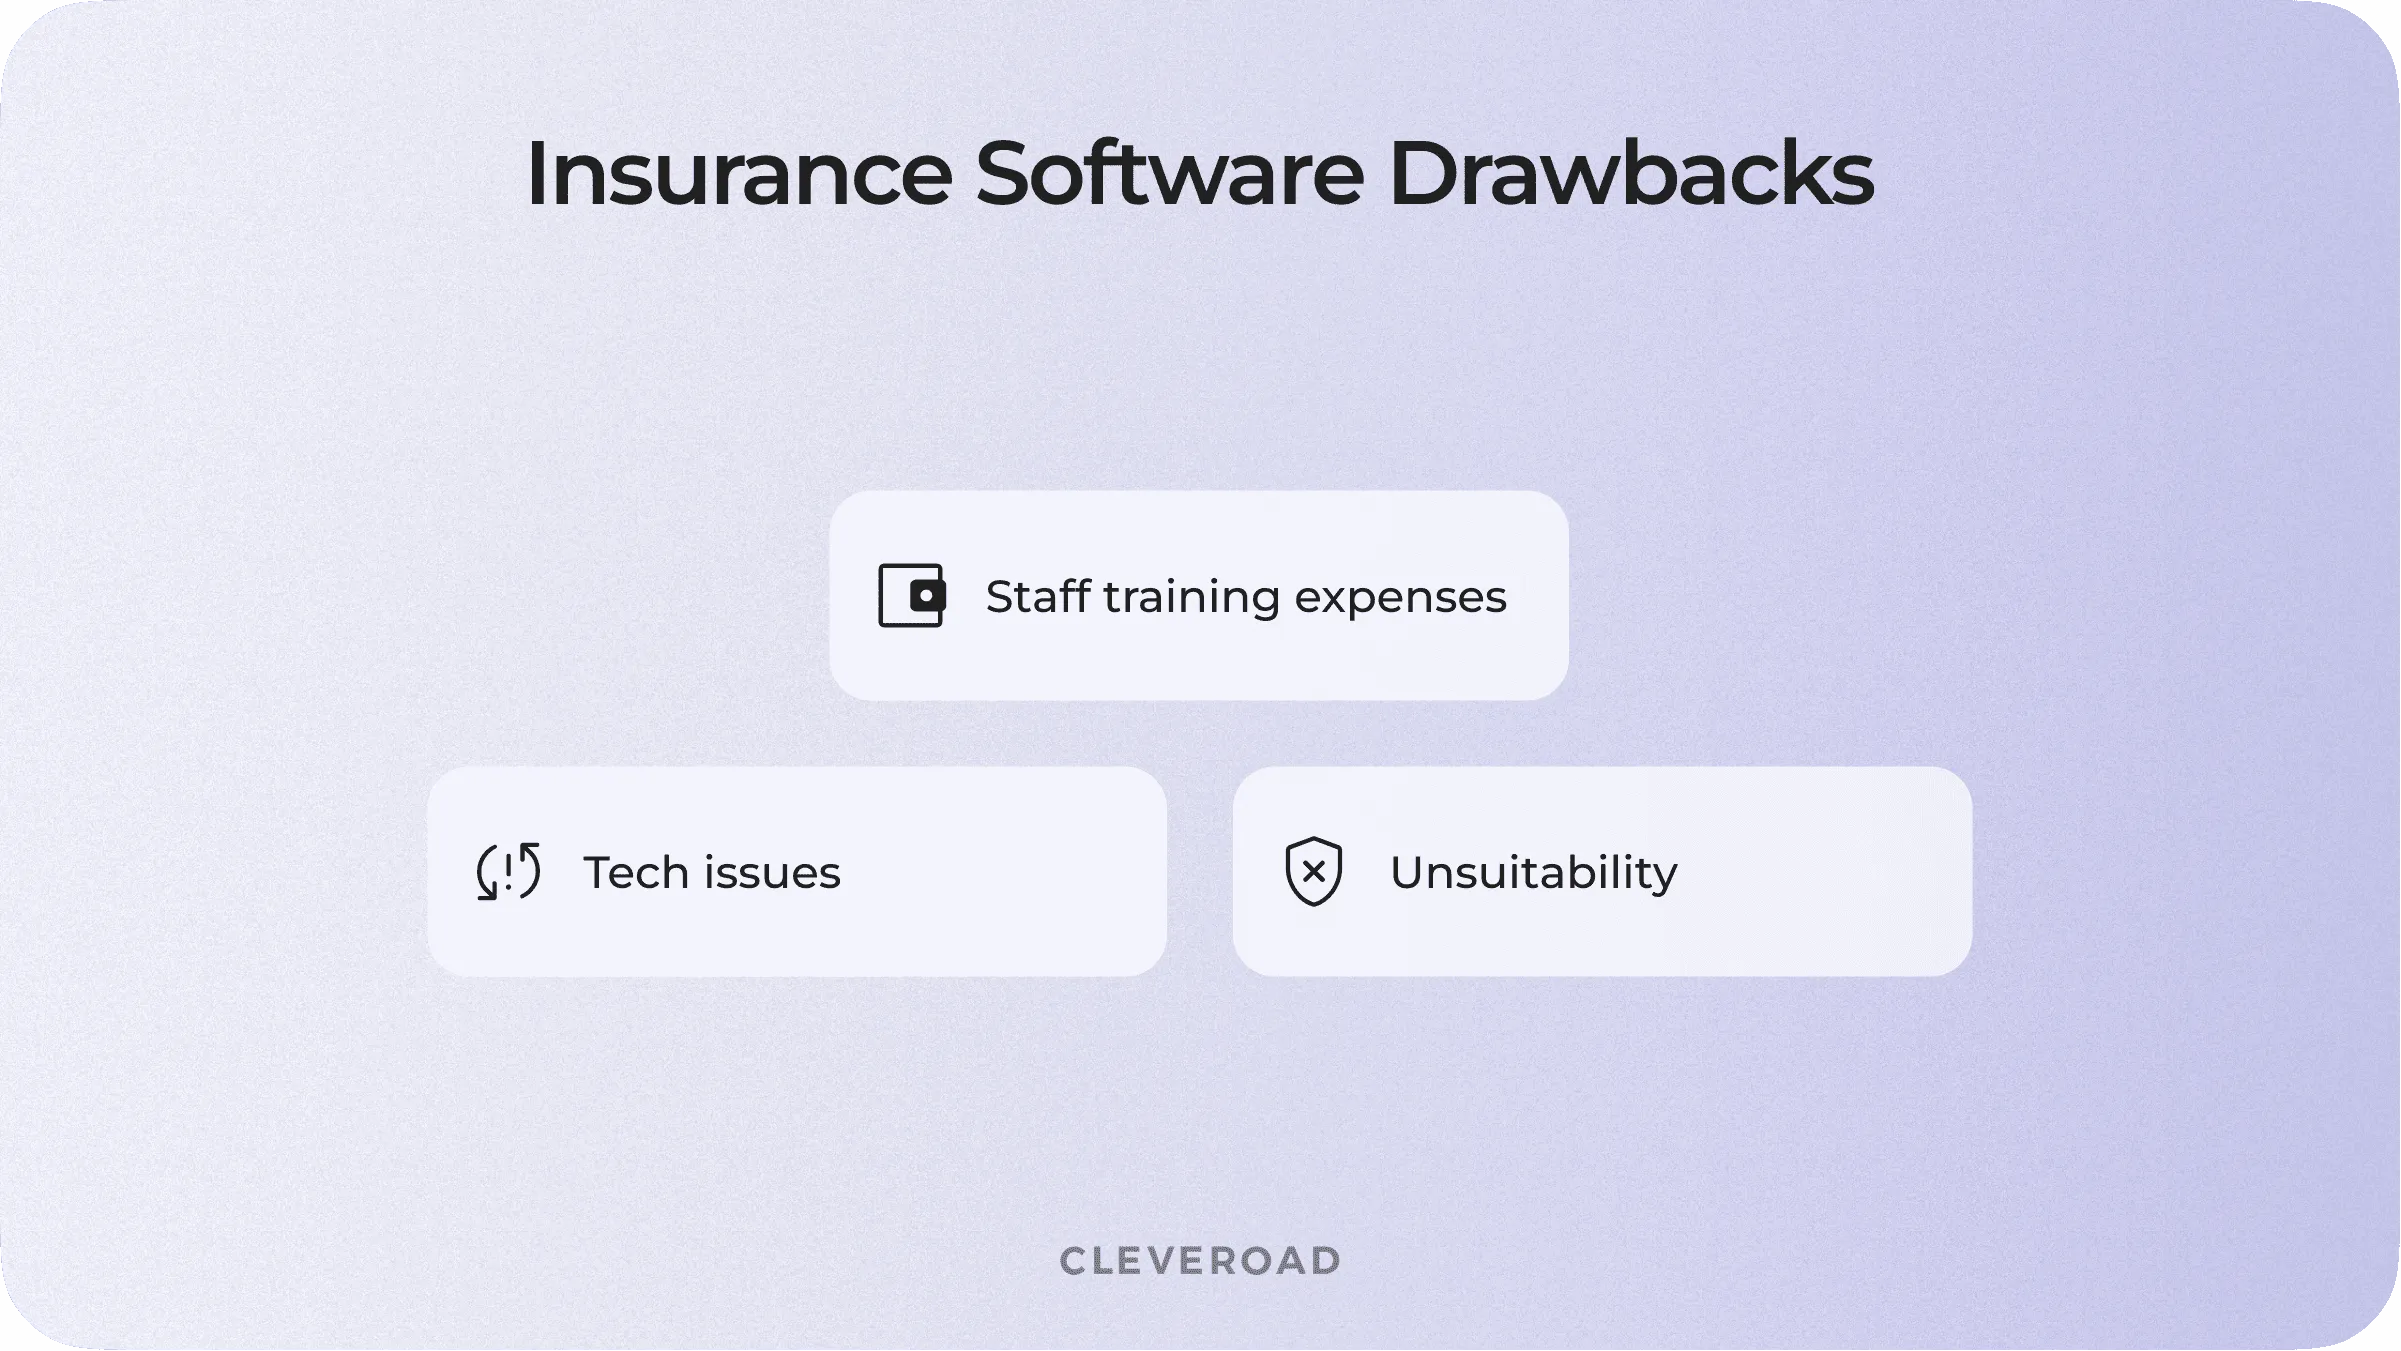 Insurance software drawbacks